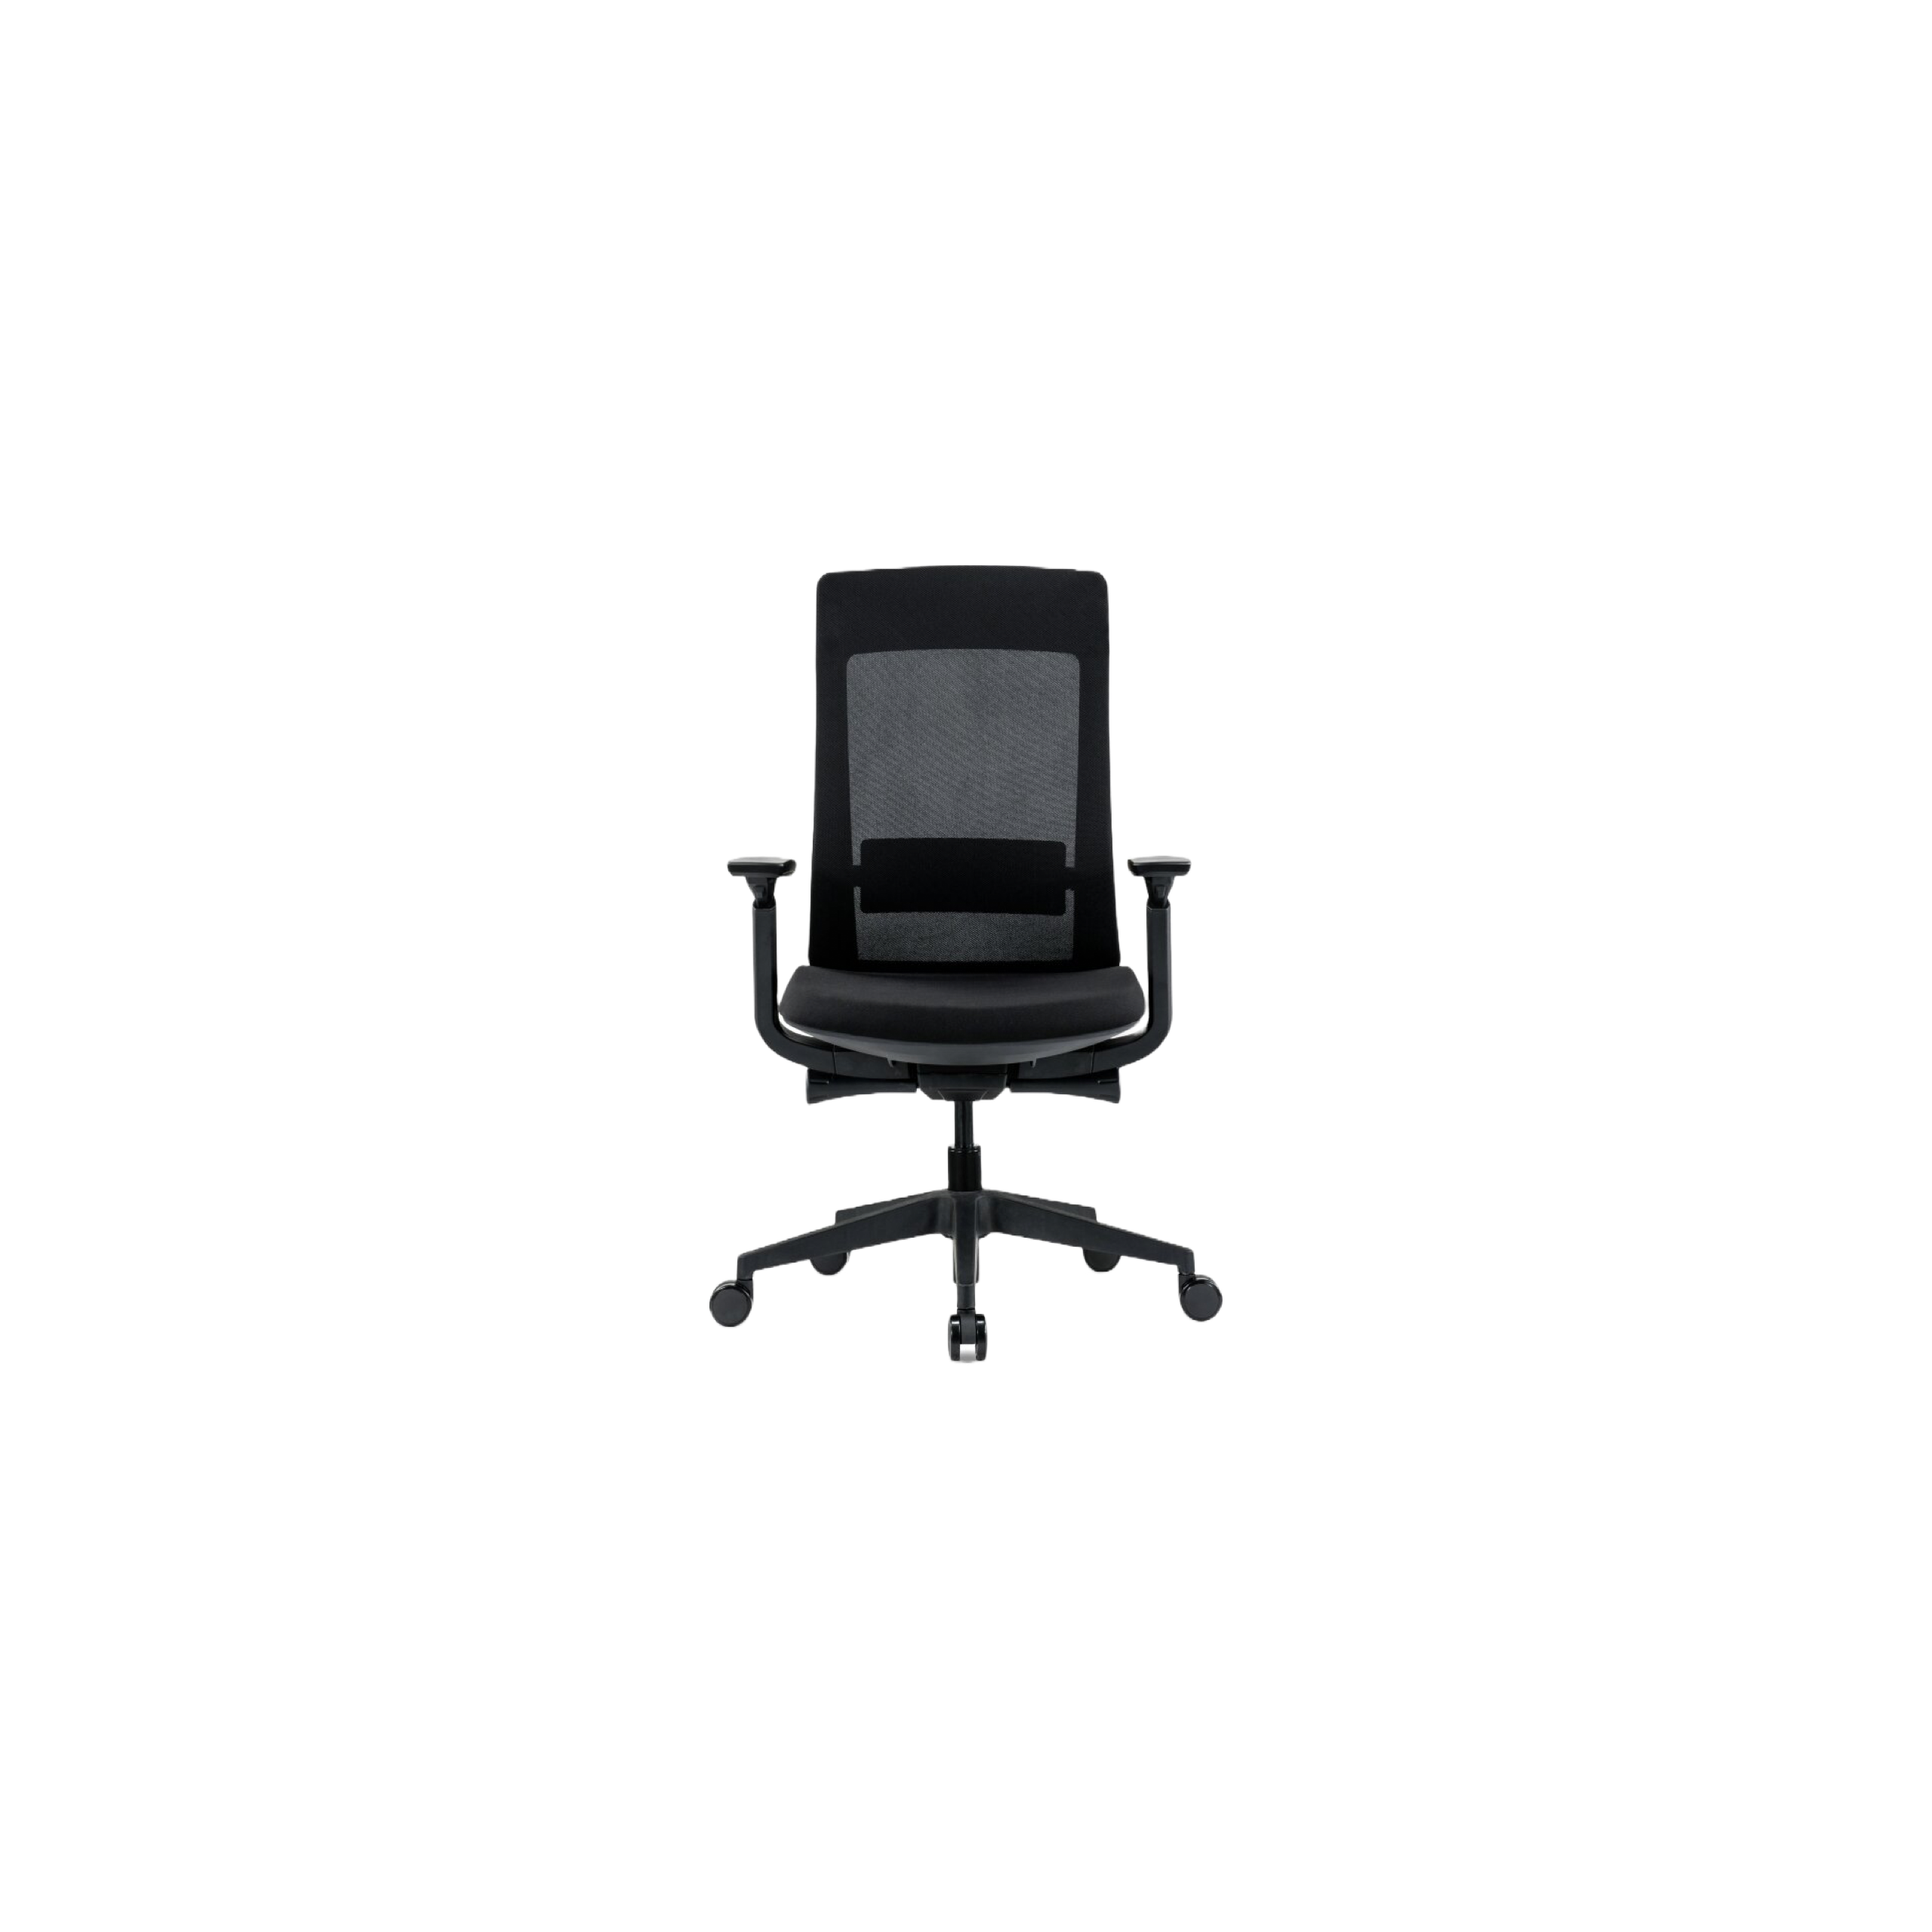 Black Office Task Chair, Commercial Grade 3, High Back - Each